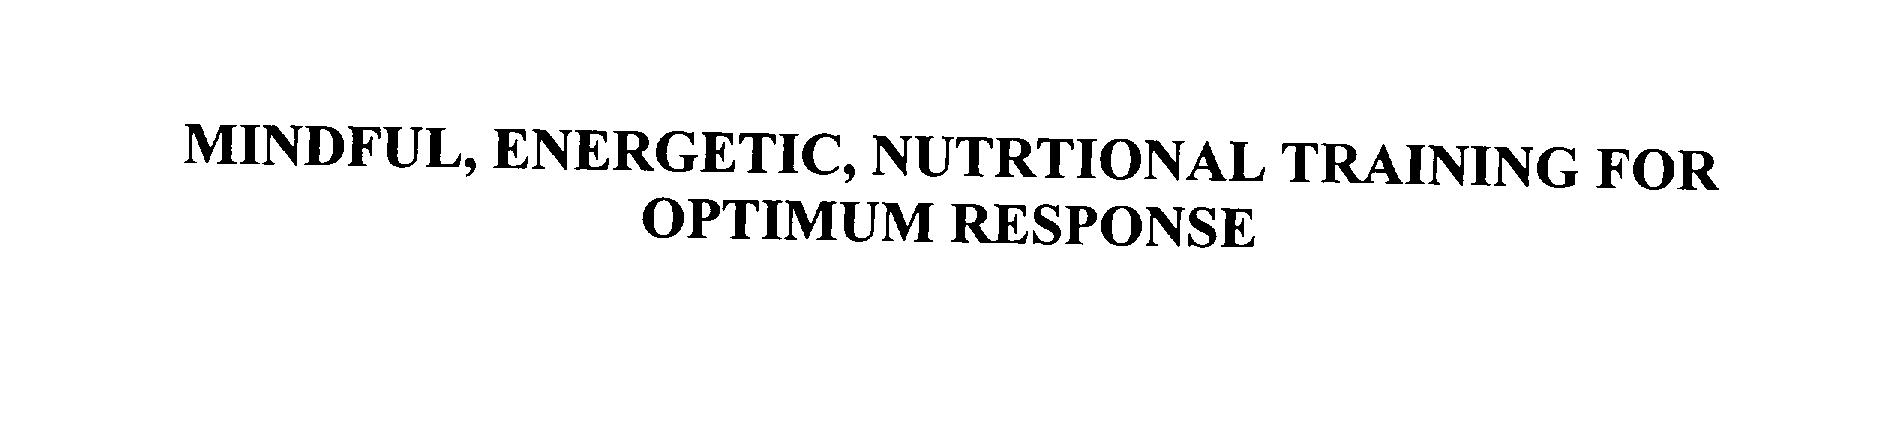  MINDFUL, ENERGETIC, NUTRITIONAL TRAINING FOR OPTIMUM RESPONSE